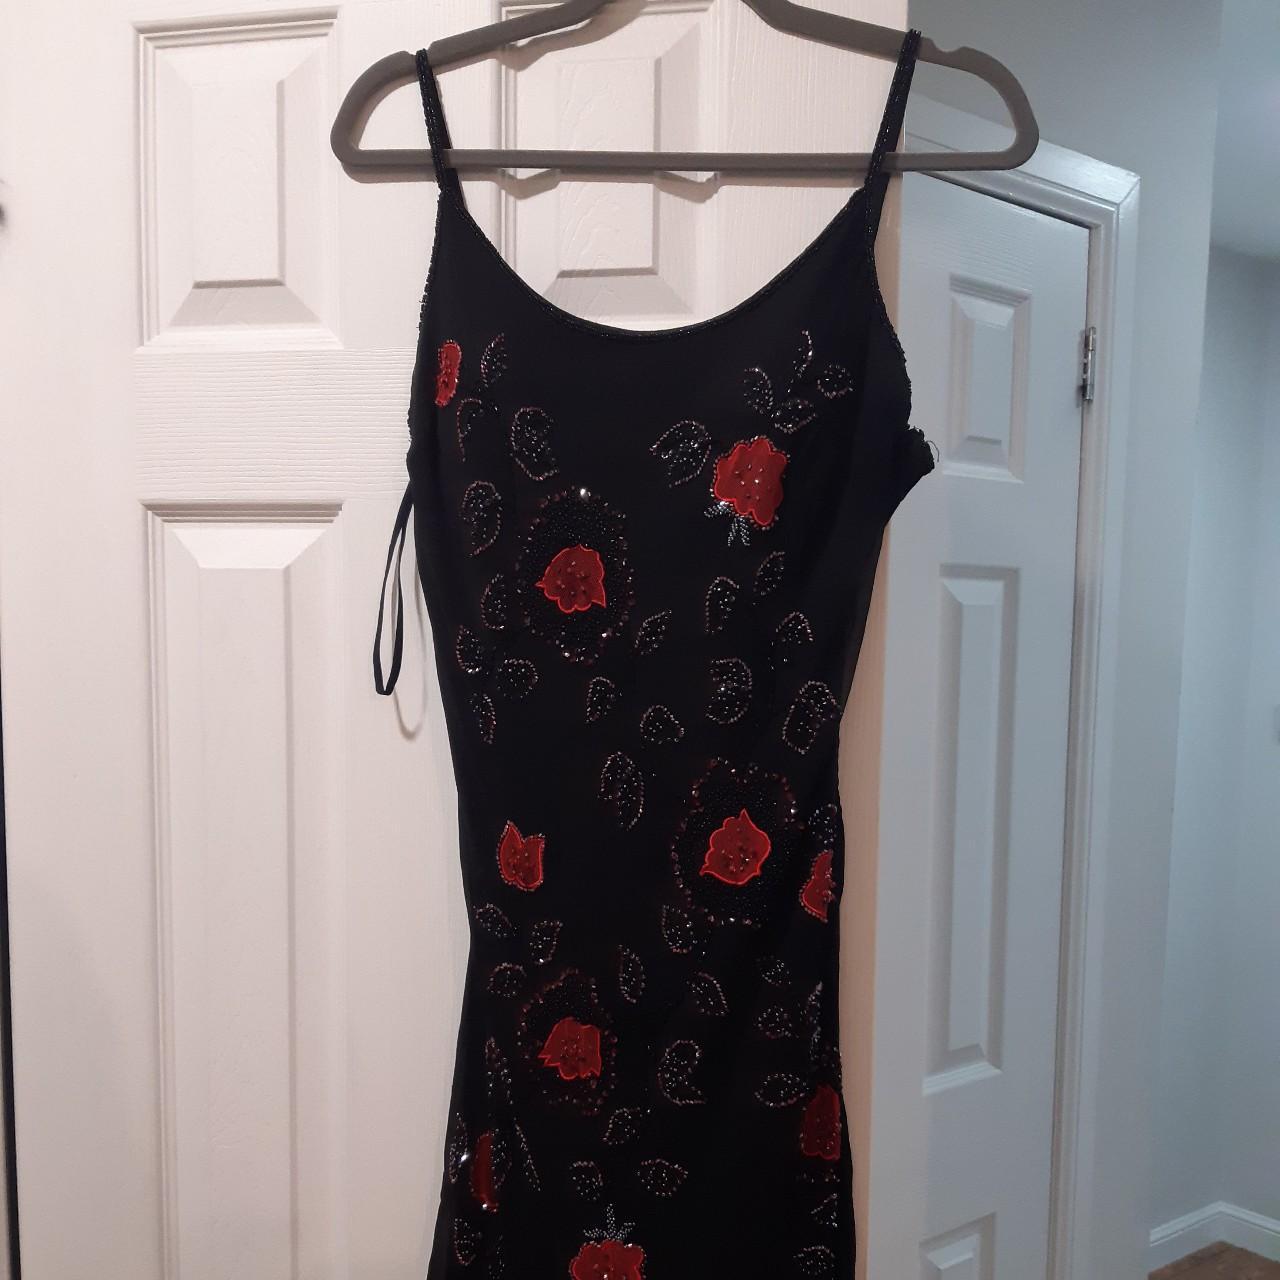 Black and red beaded dress vintage - Depop